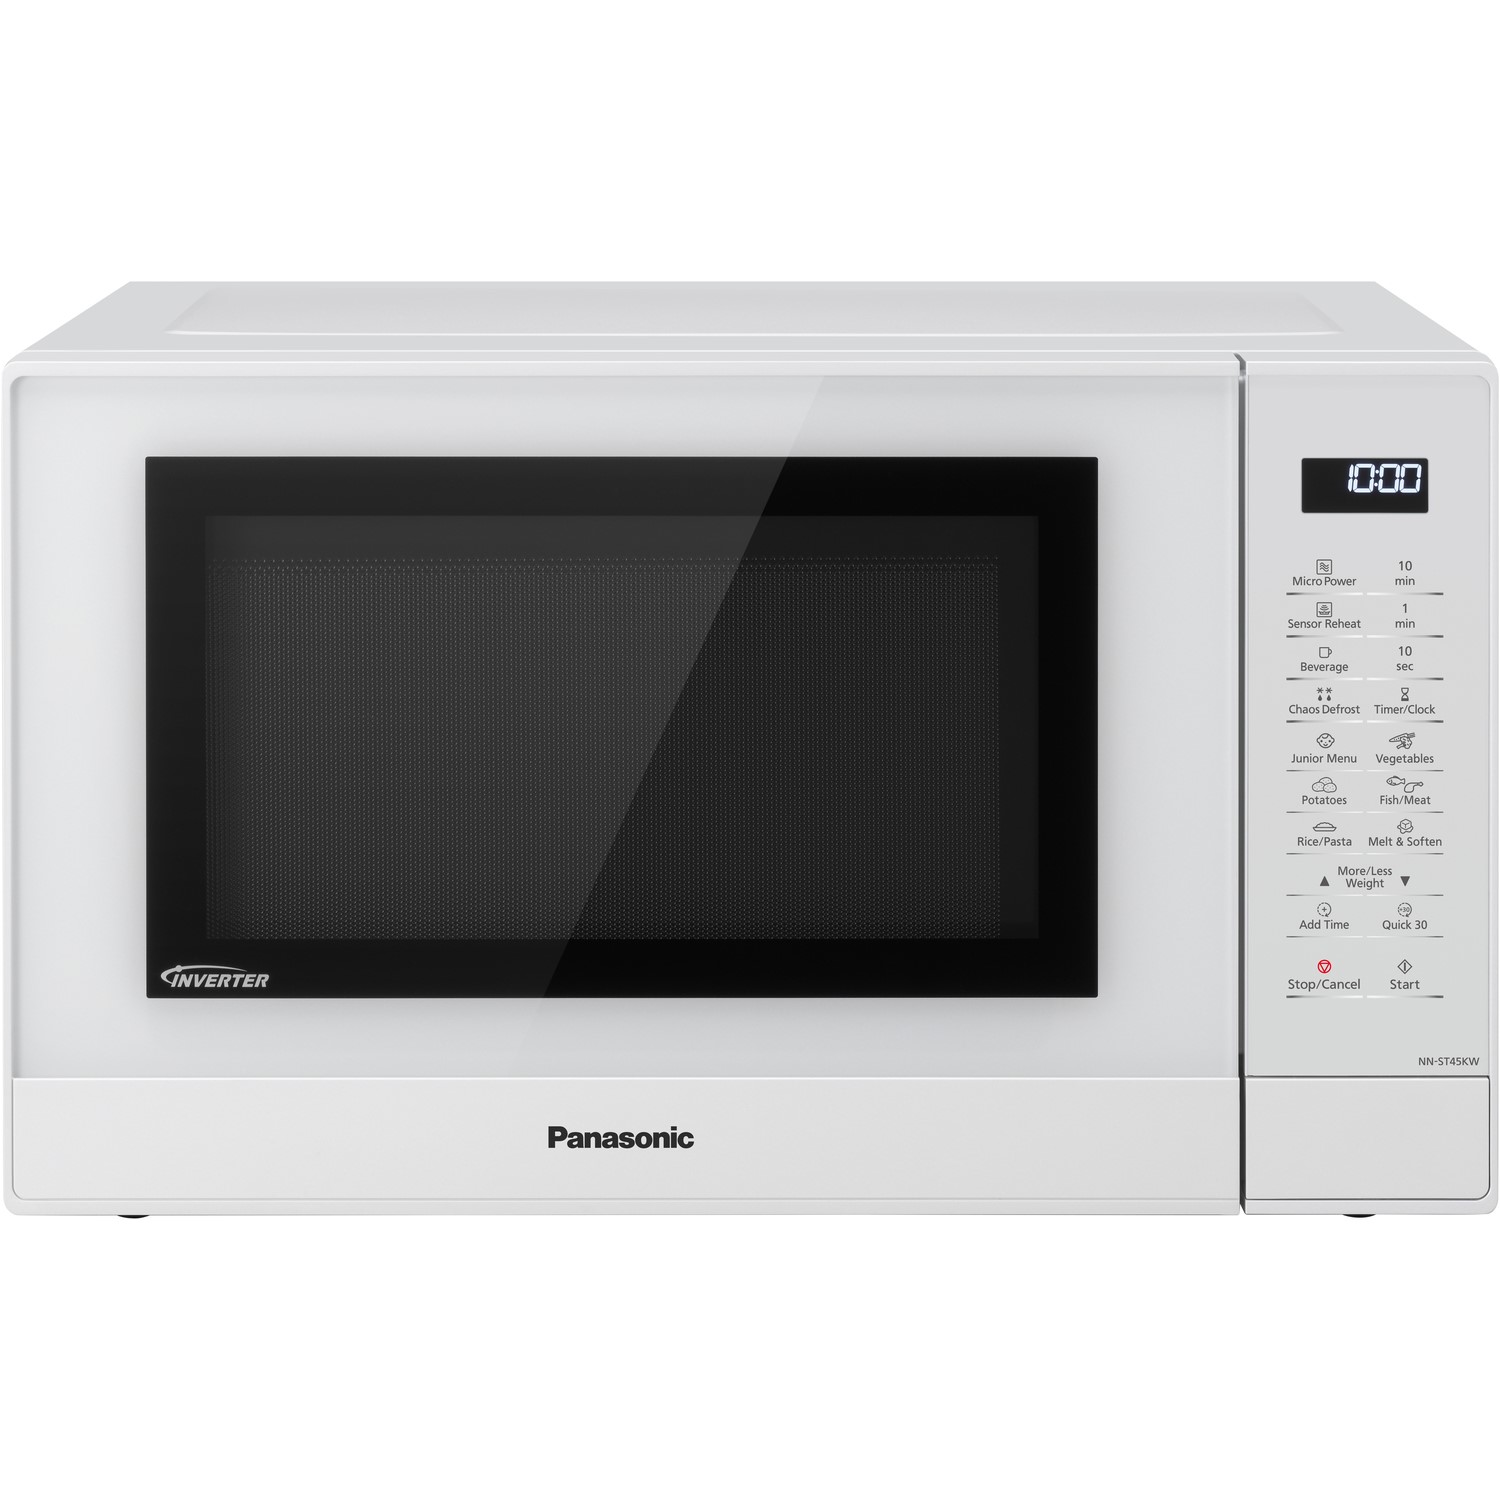 Panasonic 32L Microwave Oven - White